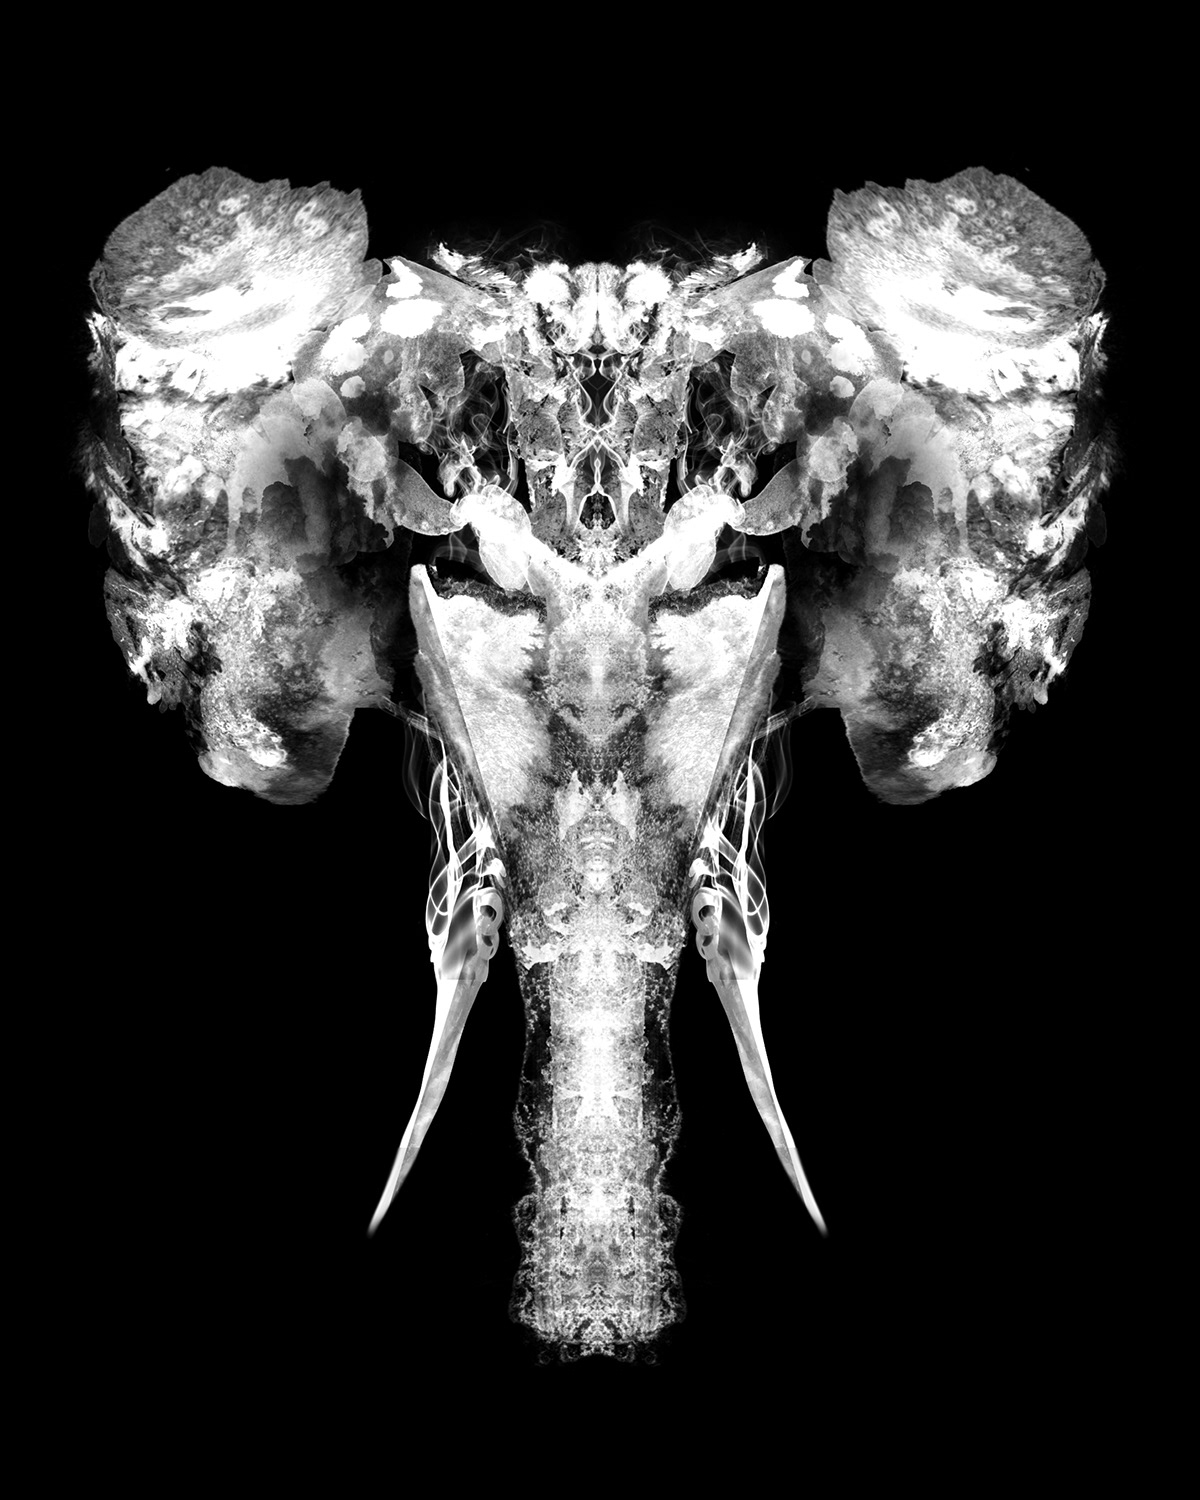 Elephant skull inkblot test